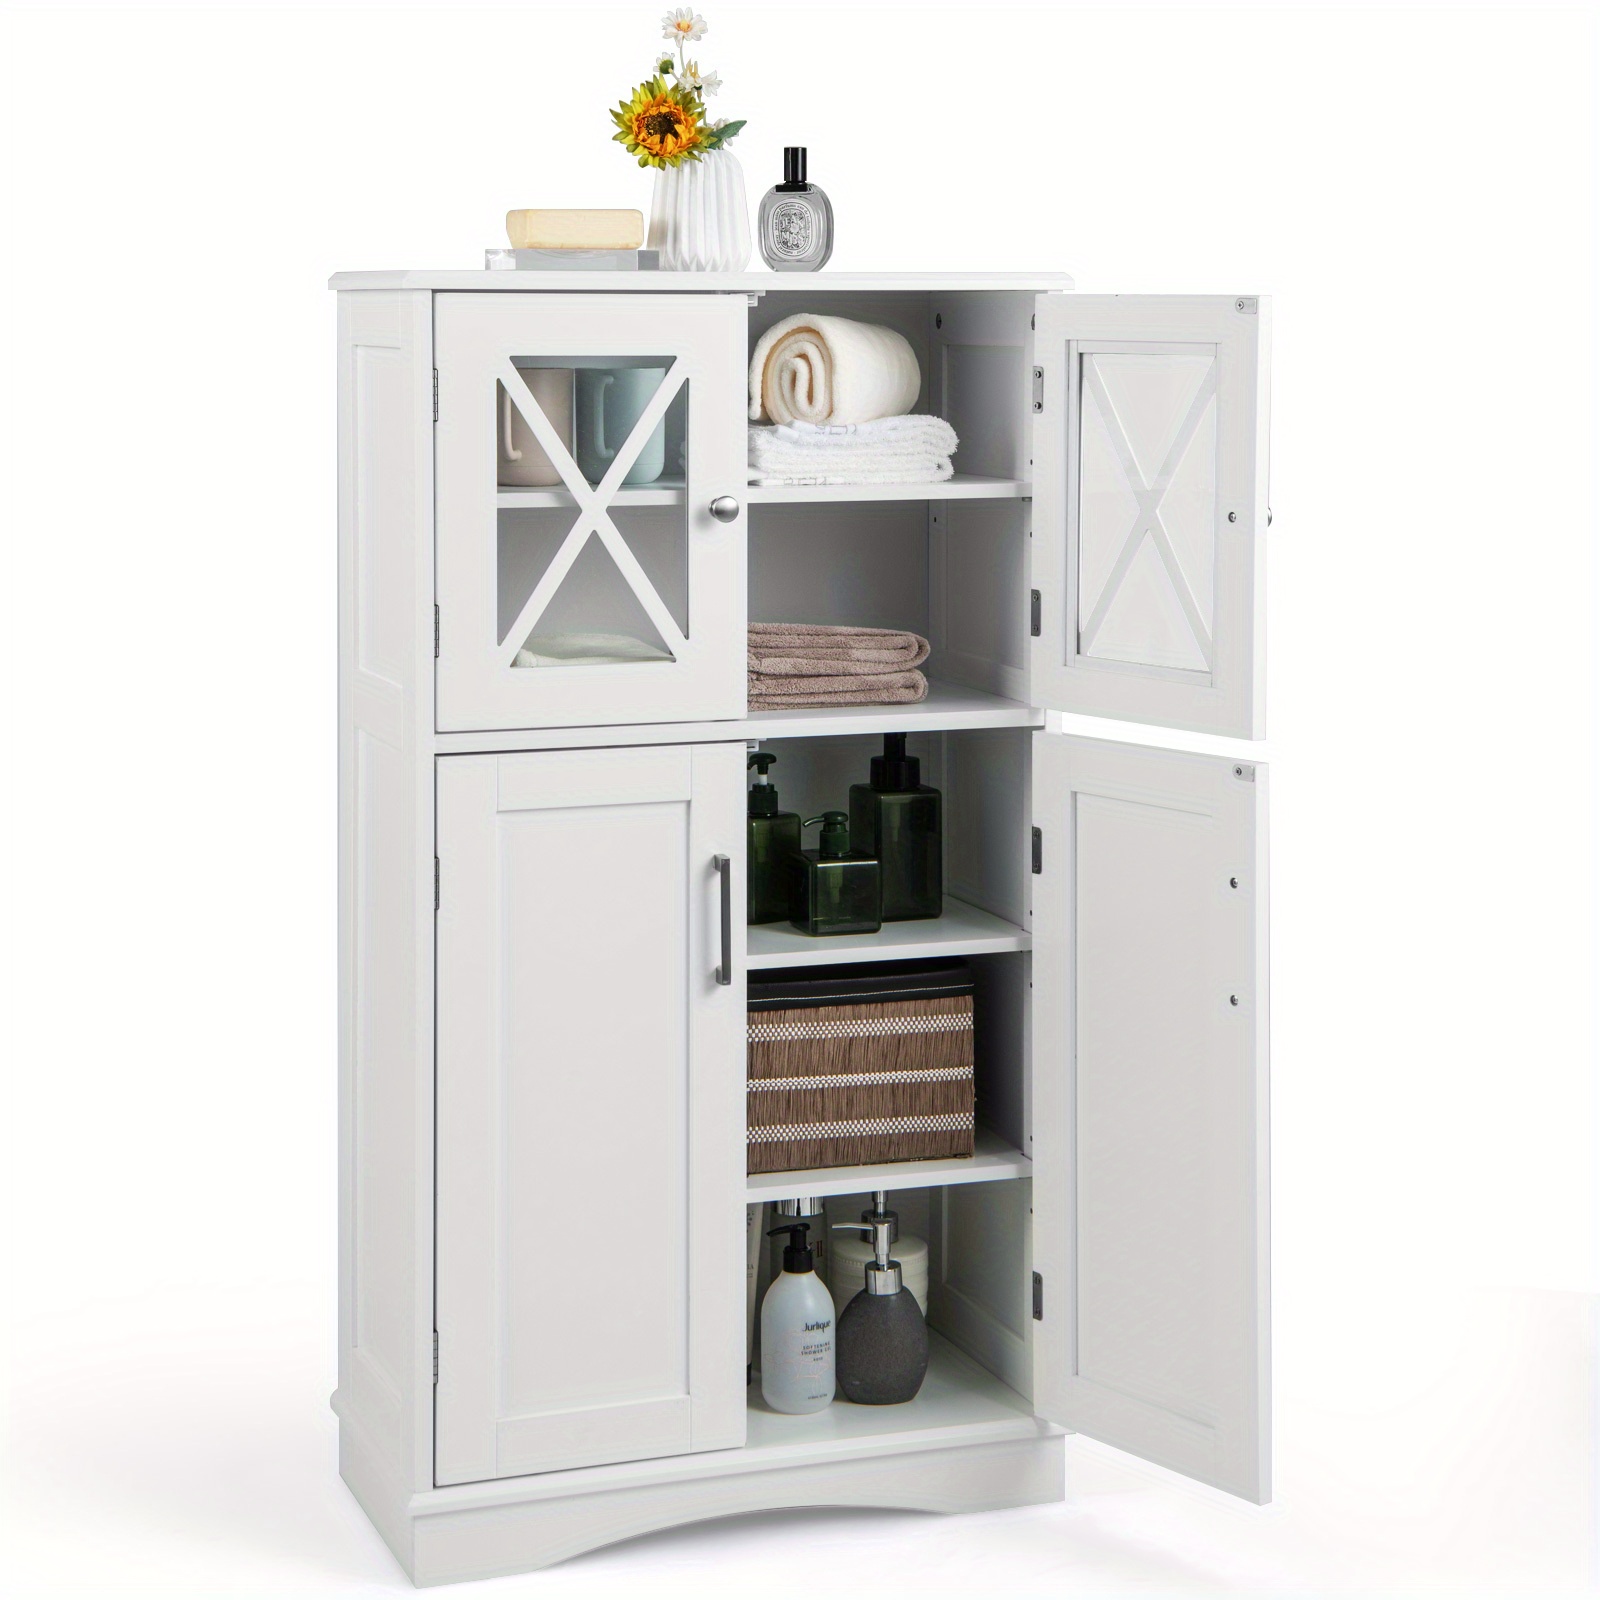 

Giantex Bathroom Storage Cabinet Linen And Adjustable Shelves